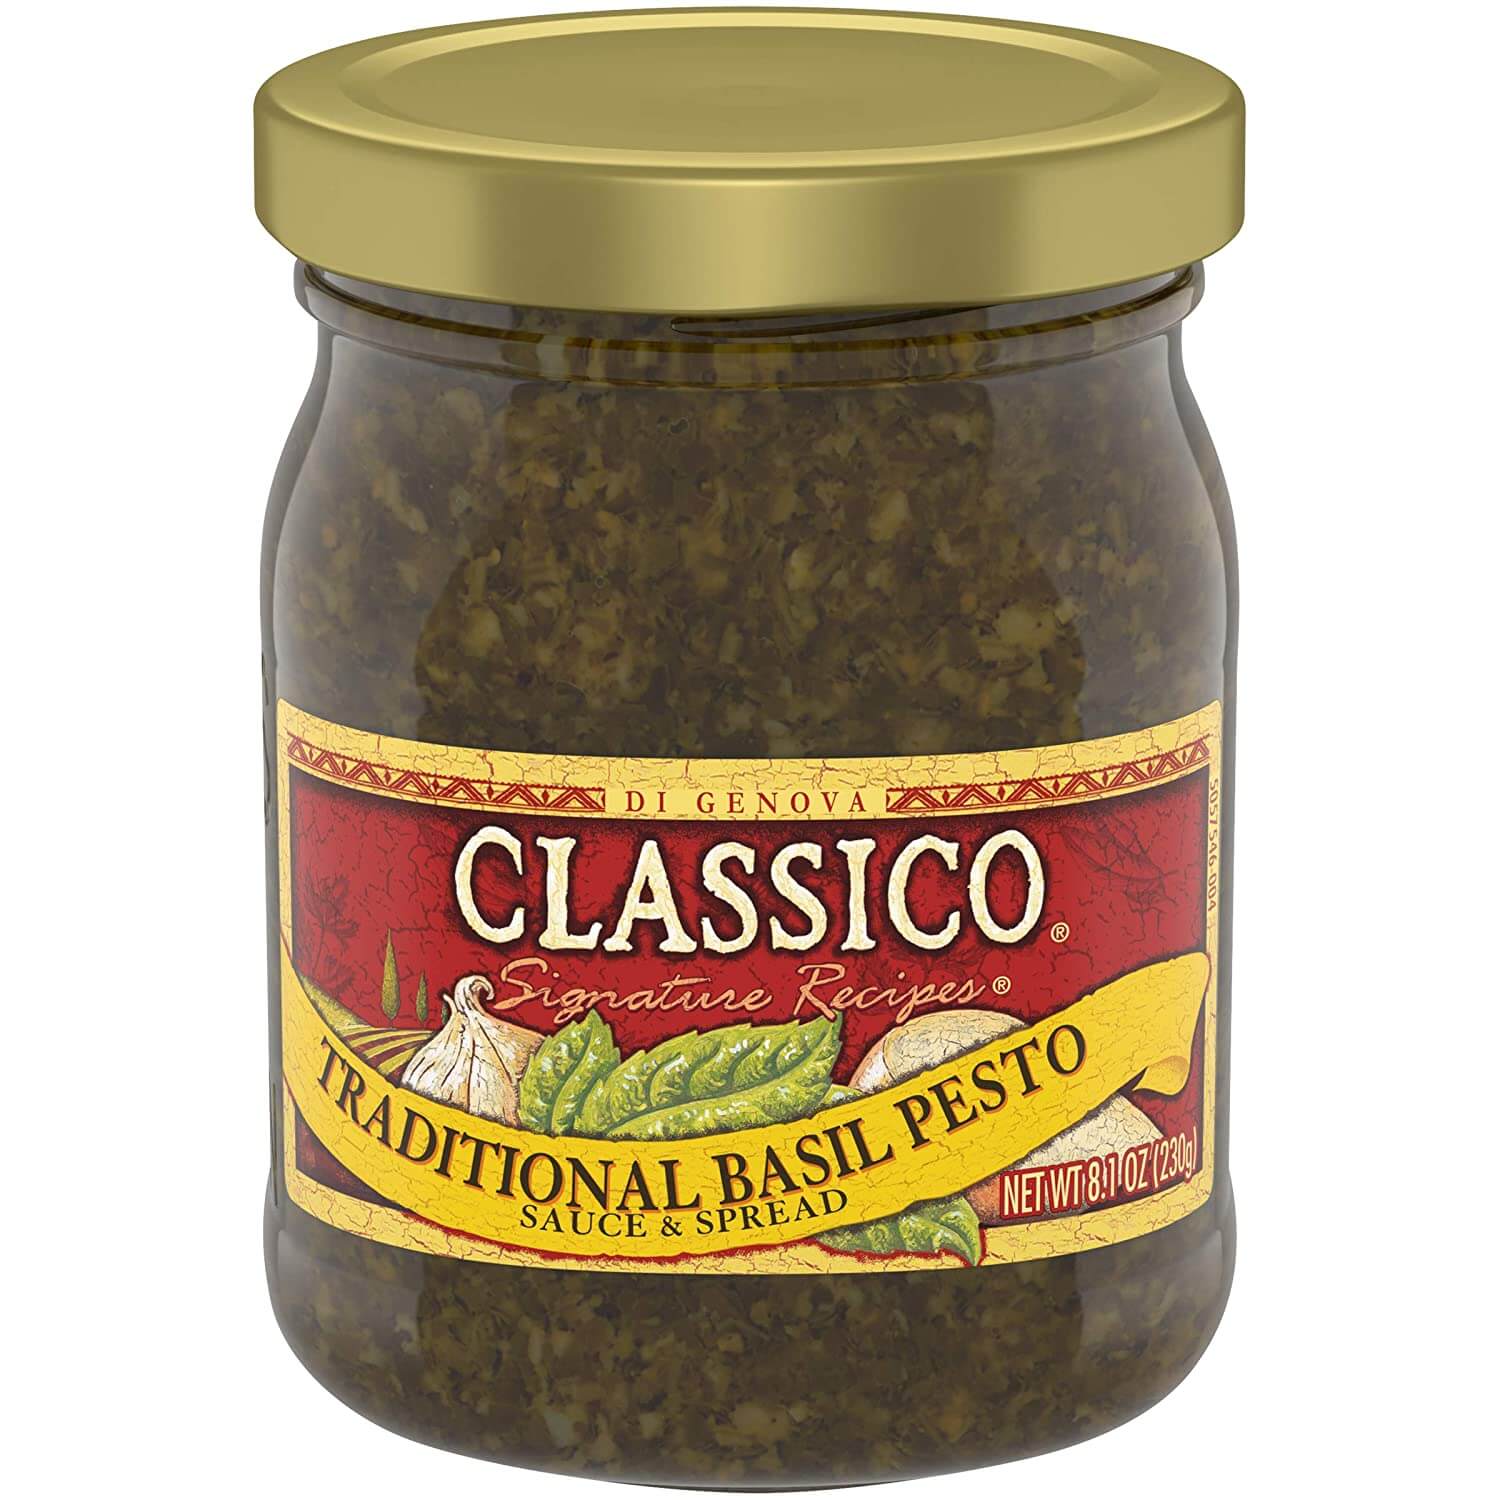 Classico Traditional Basil Pesto Sauce and Spread